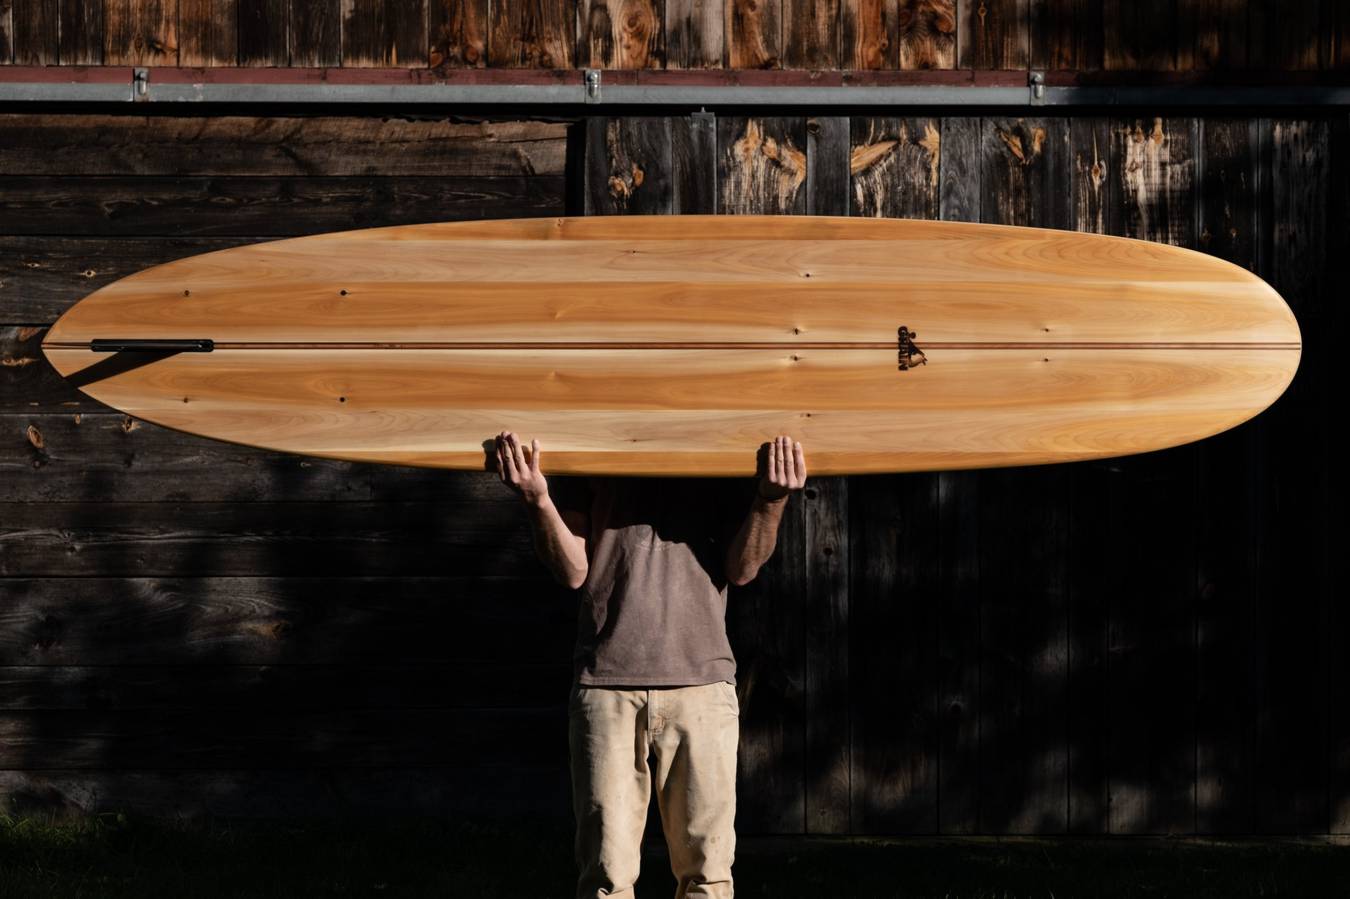 Root hollow wooden surfboard